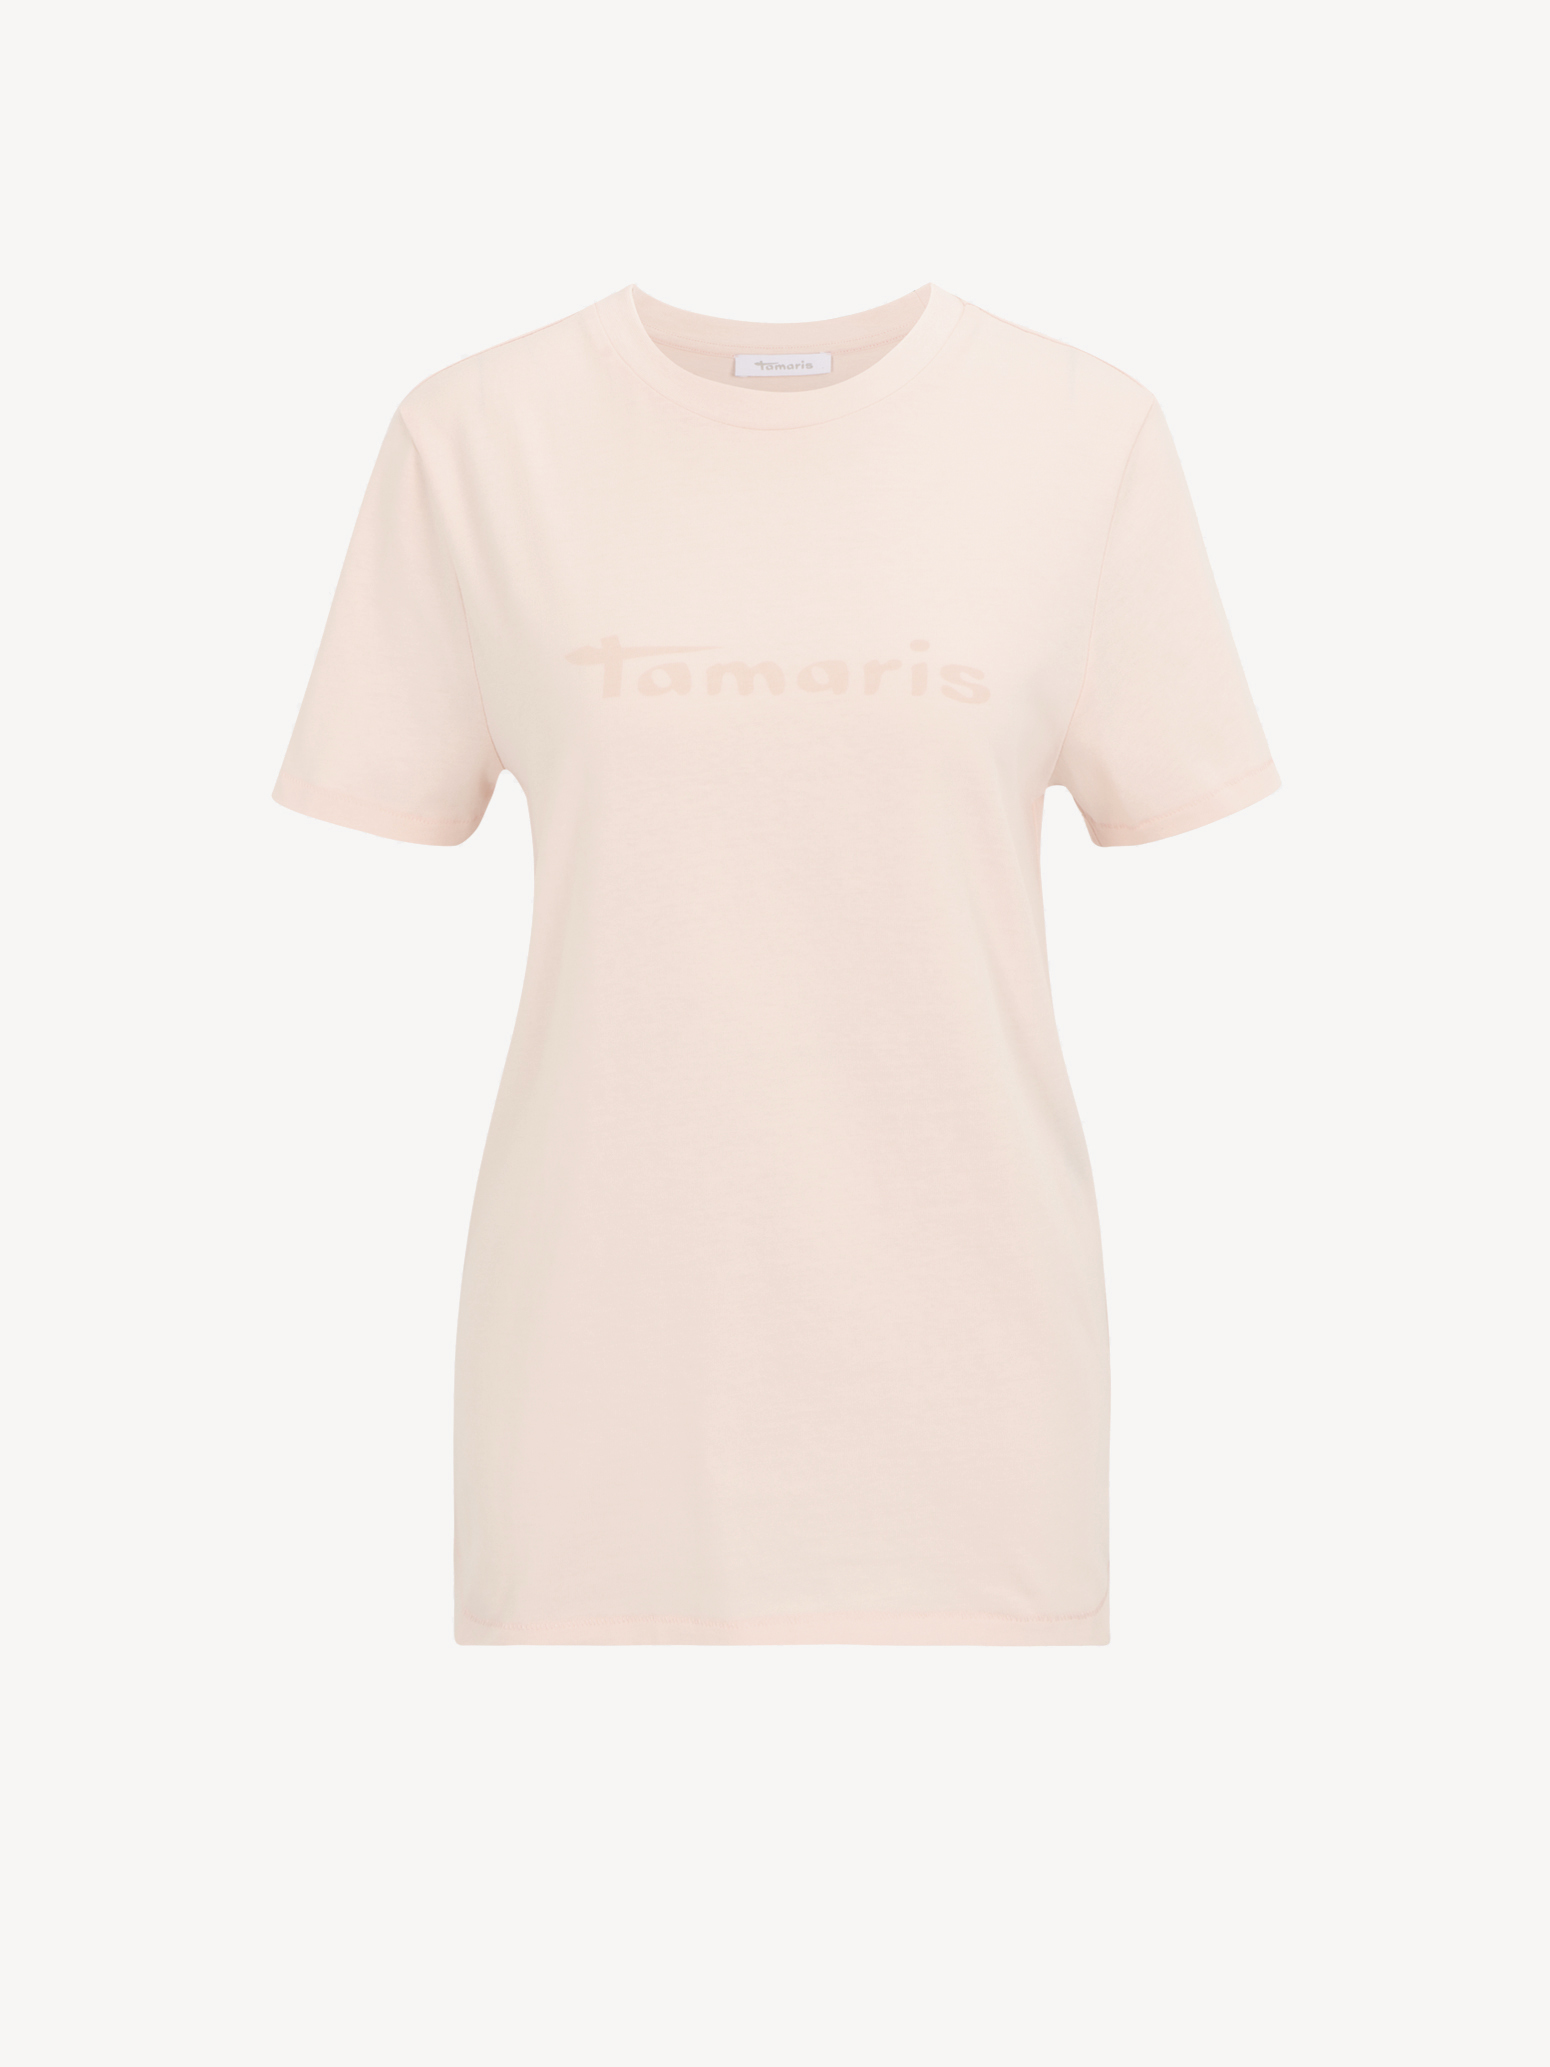 T-Shirt - Tamaris TAW0121-40060: online kaufen! T-Shirts rosa